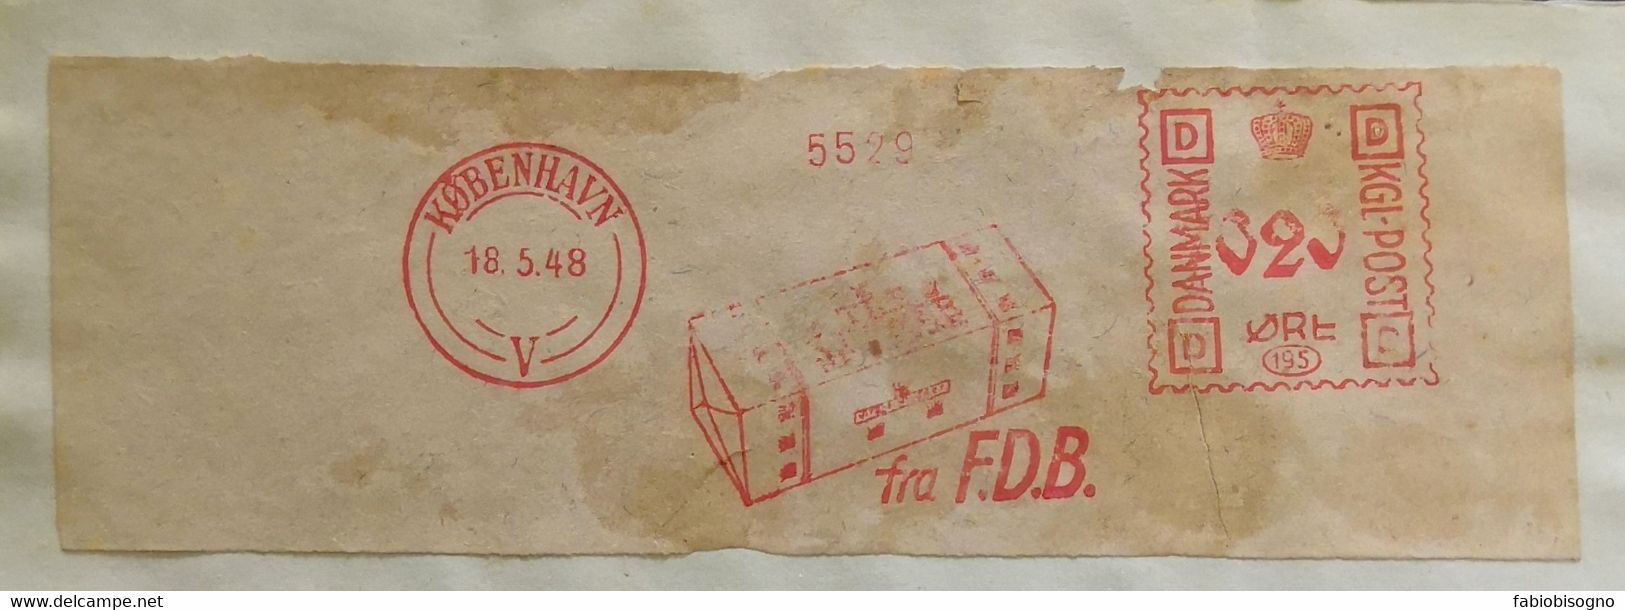 Danmark 1948 - Fra F.D.B. - EMA Meter Freistempel Fragment - Machines à Affranchir (EMA)